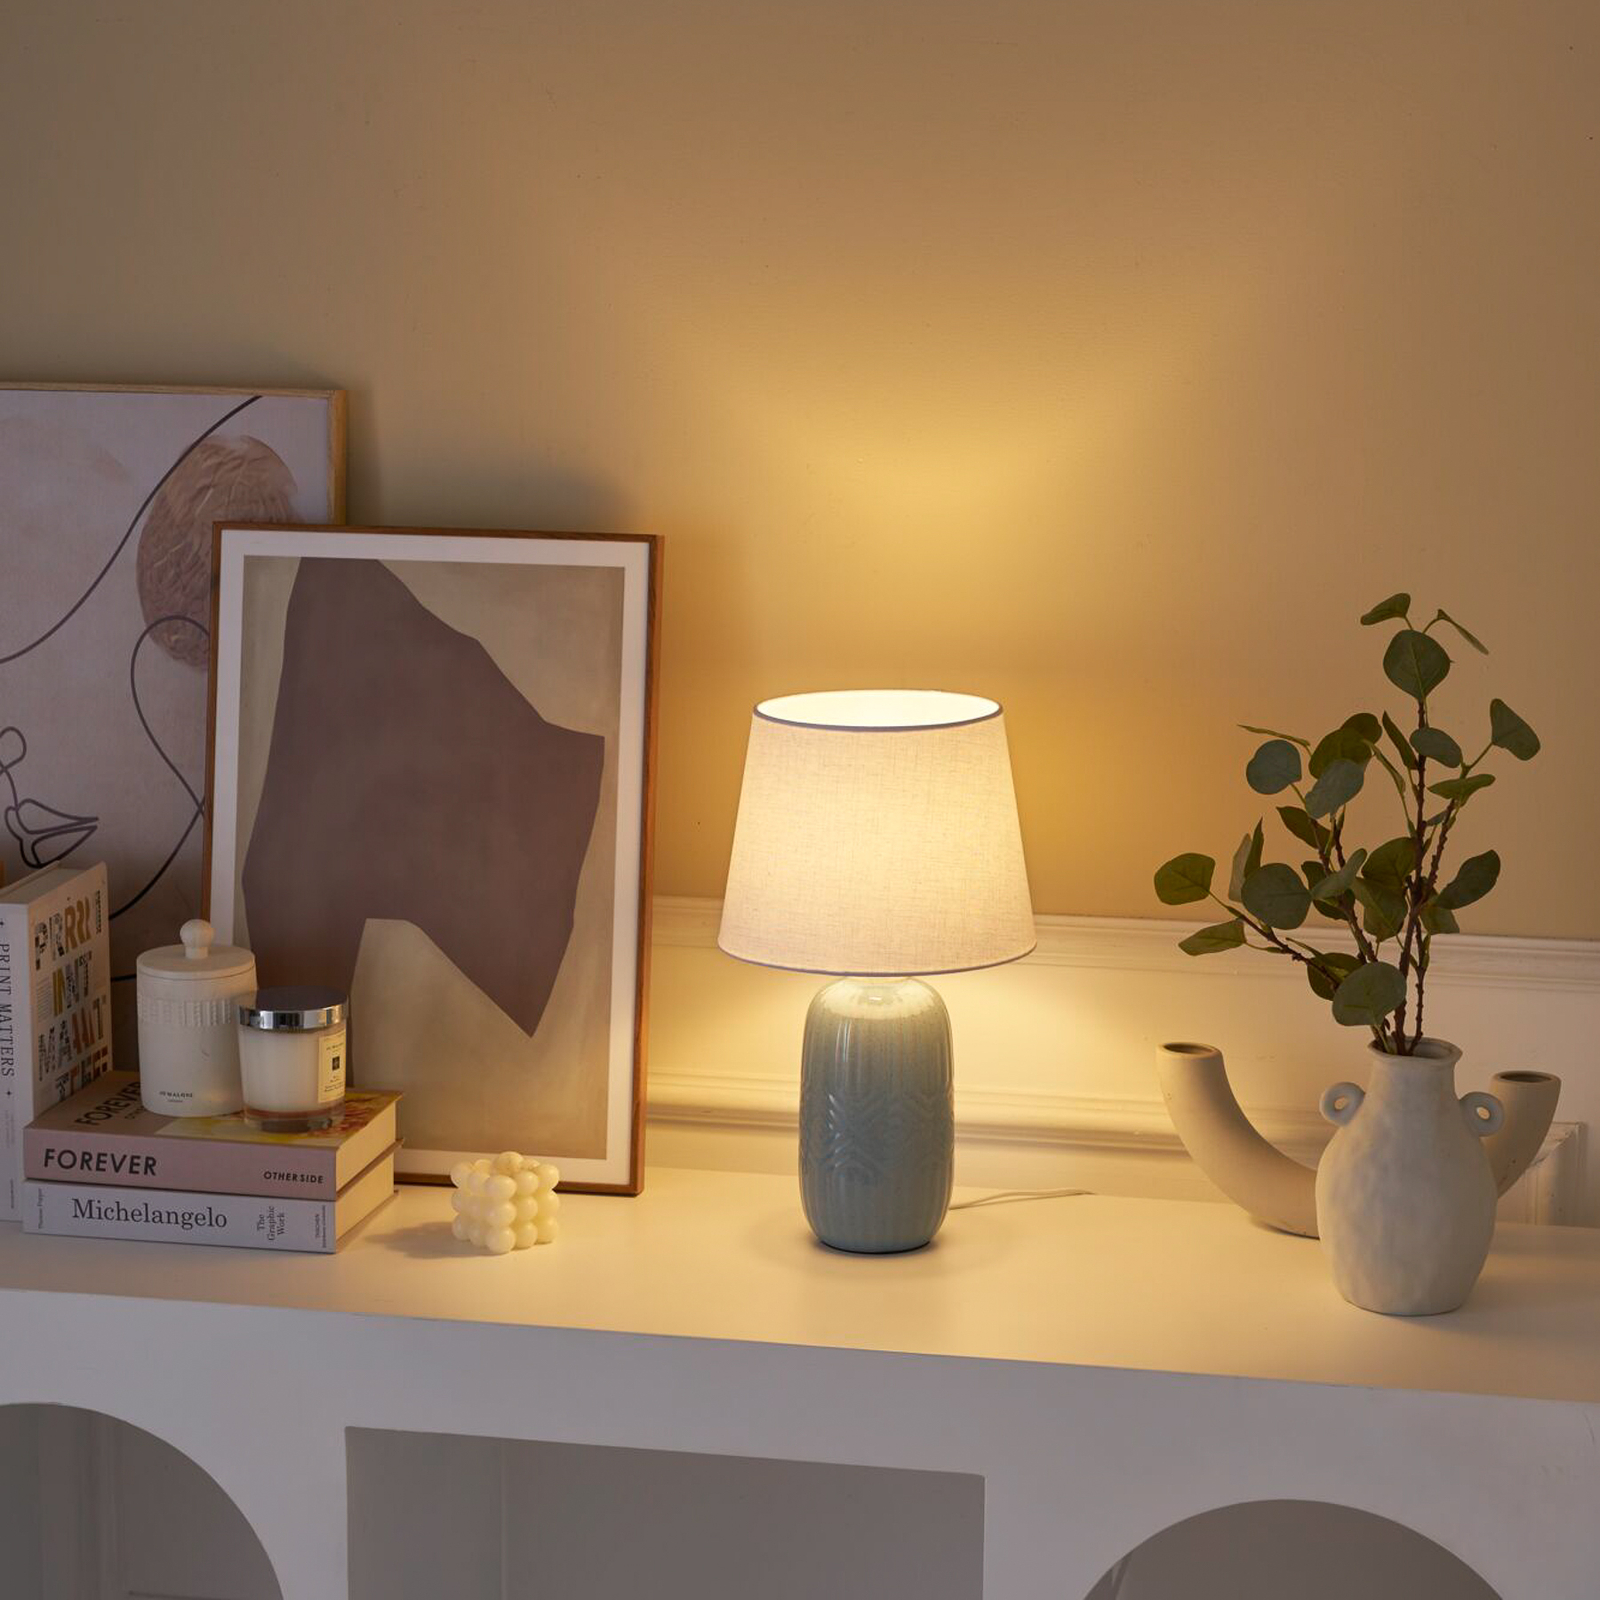 Pauleen Glowing Hug bordslampa, vit/gråblå